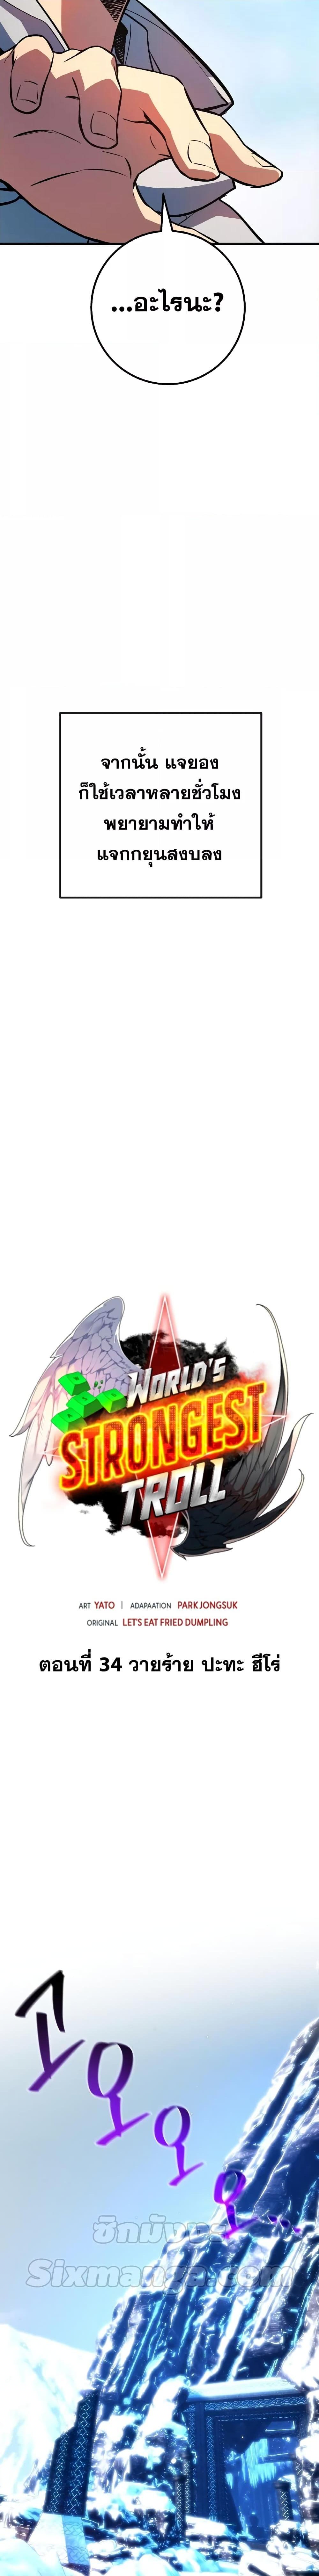 Worldโ€s Strongest Troll 34 07